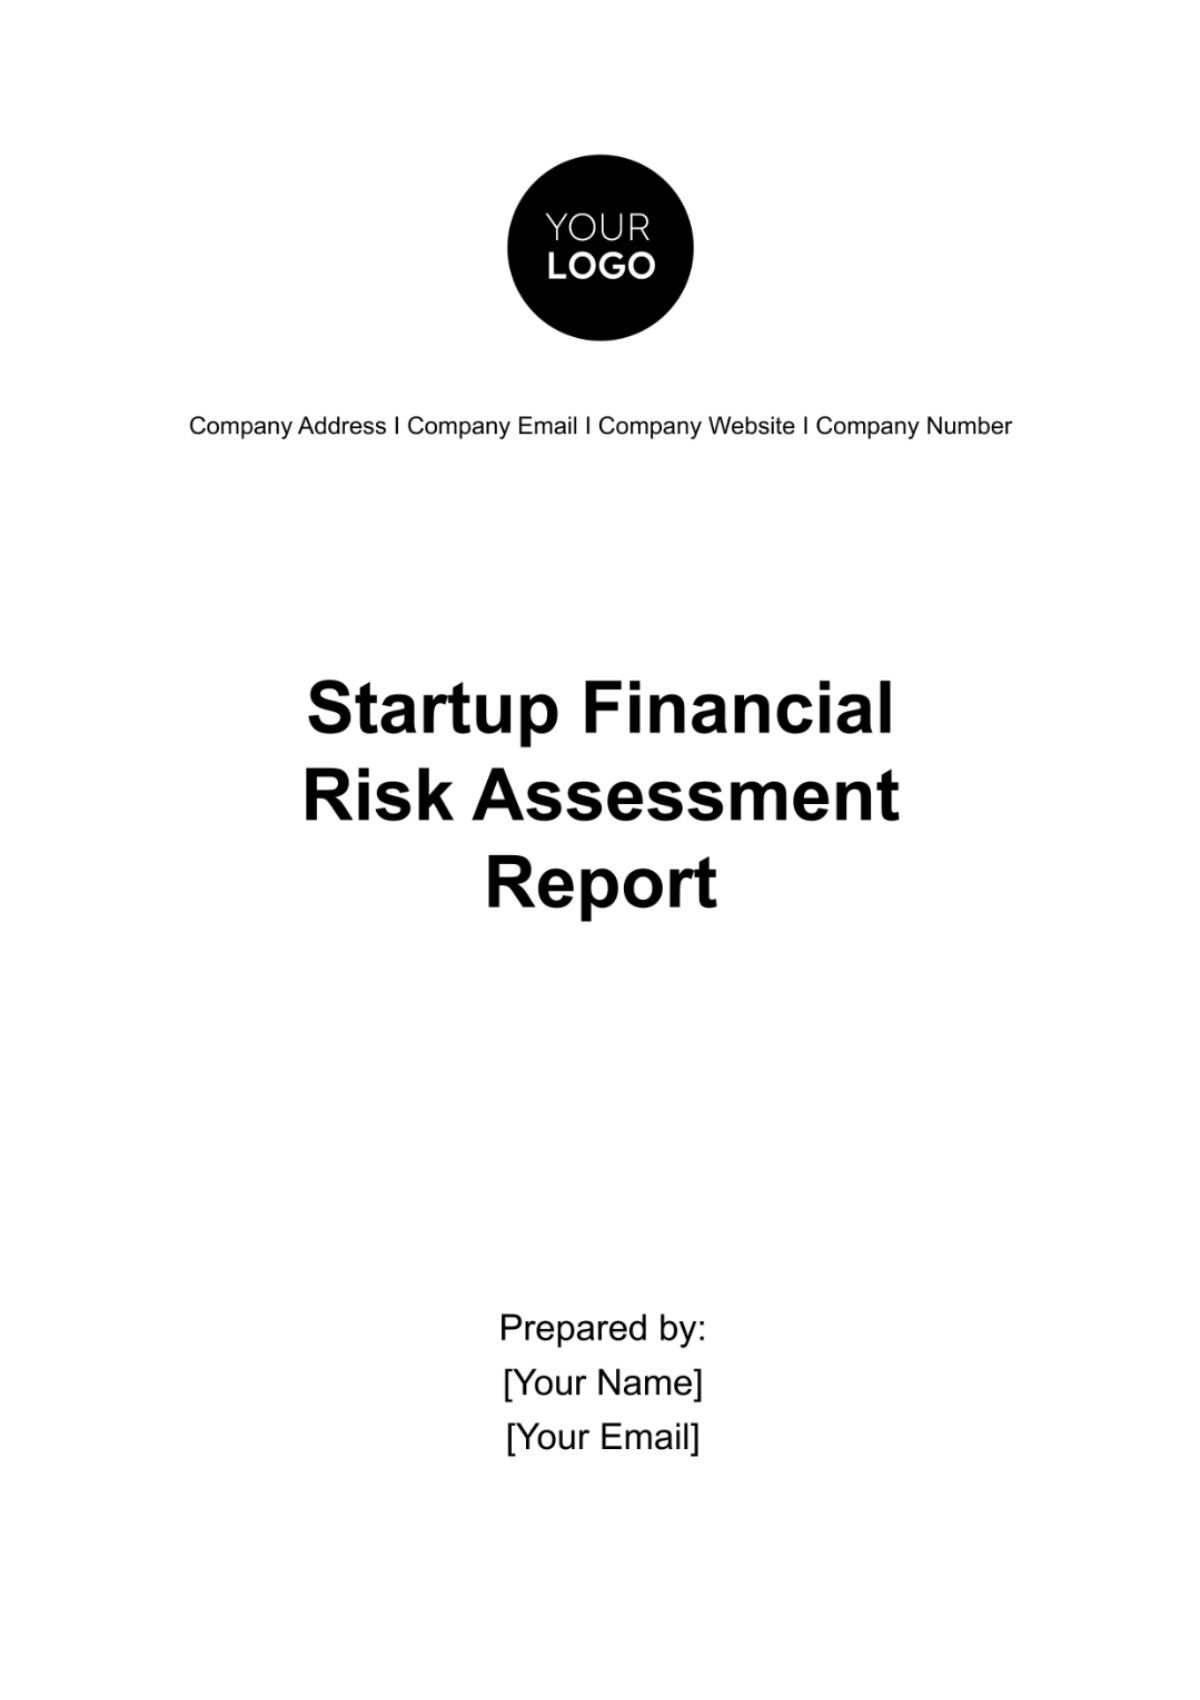 Startup Financial Risk Assessment Report Template